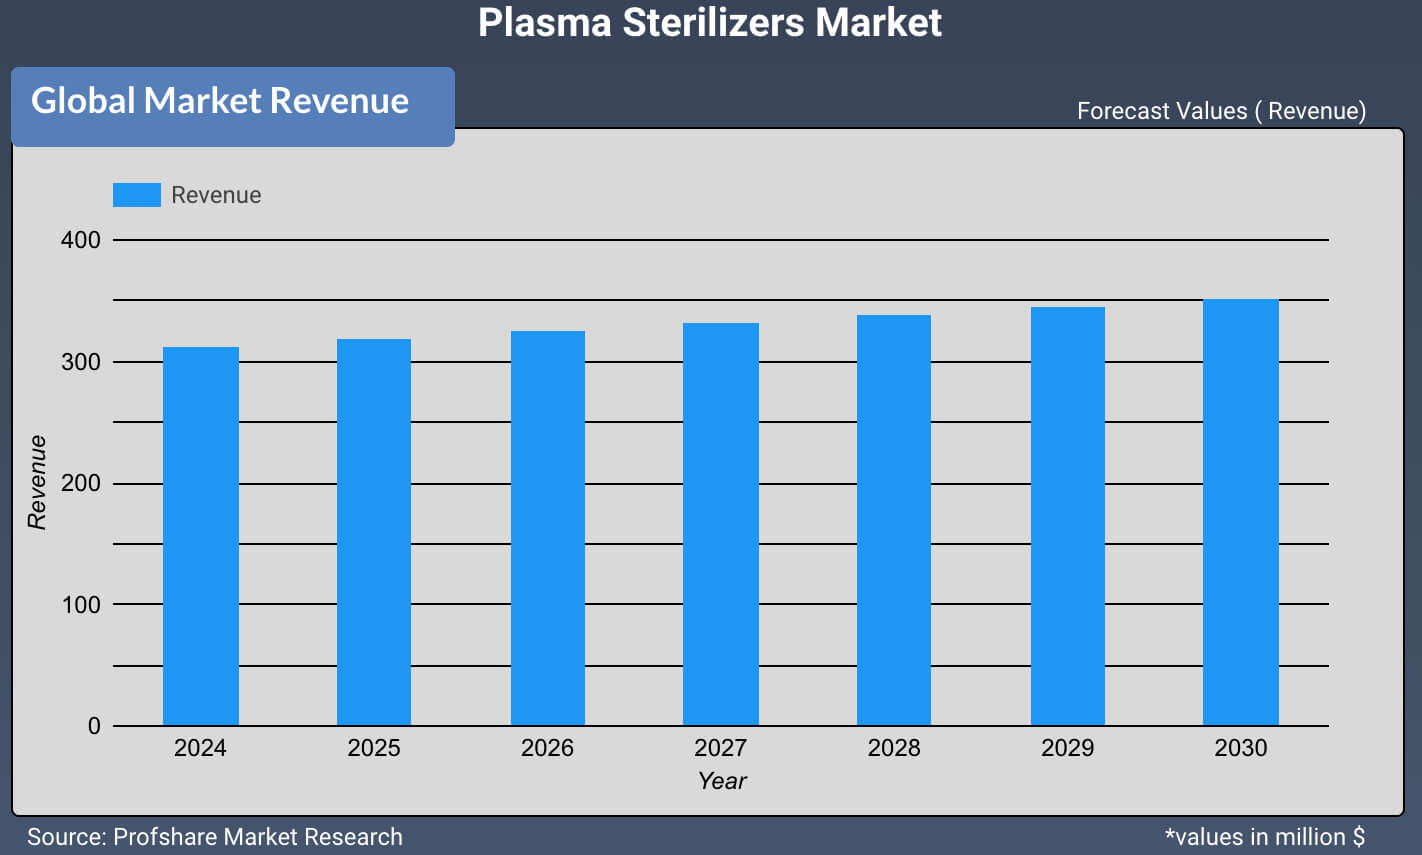 Plasma Sterilizers Market